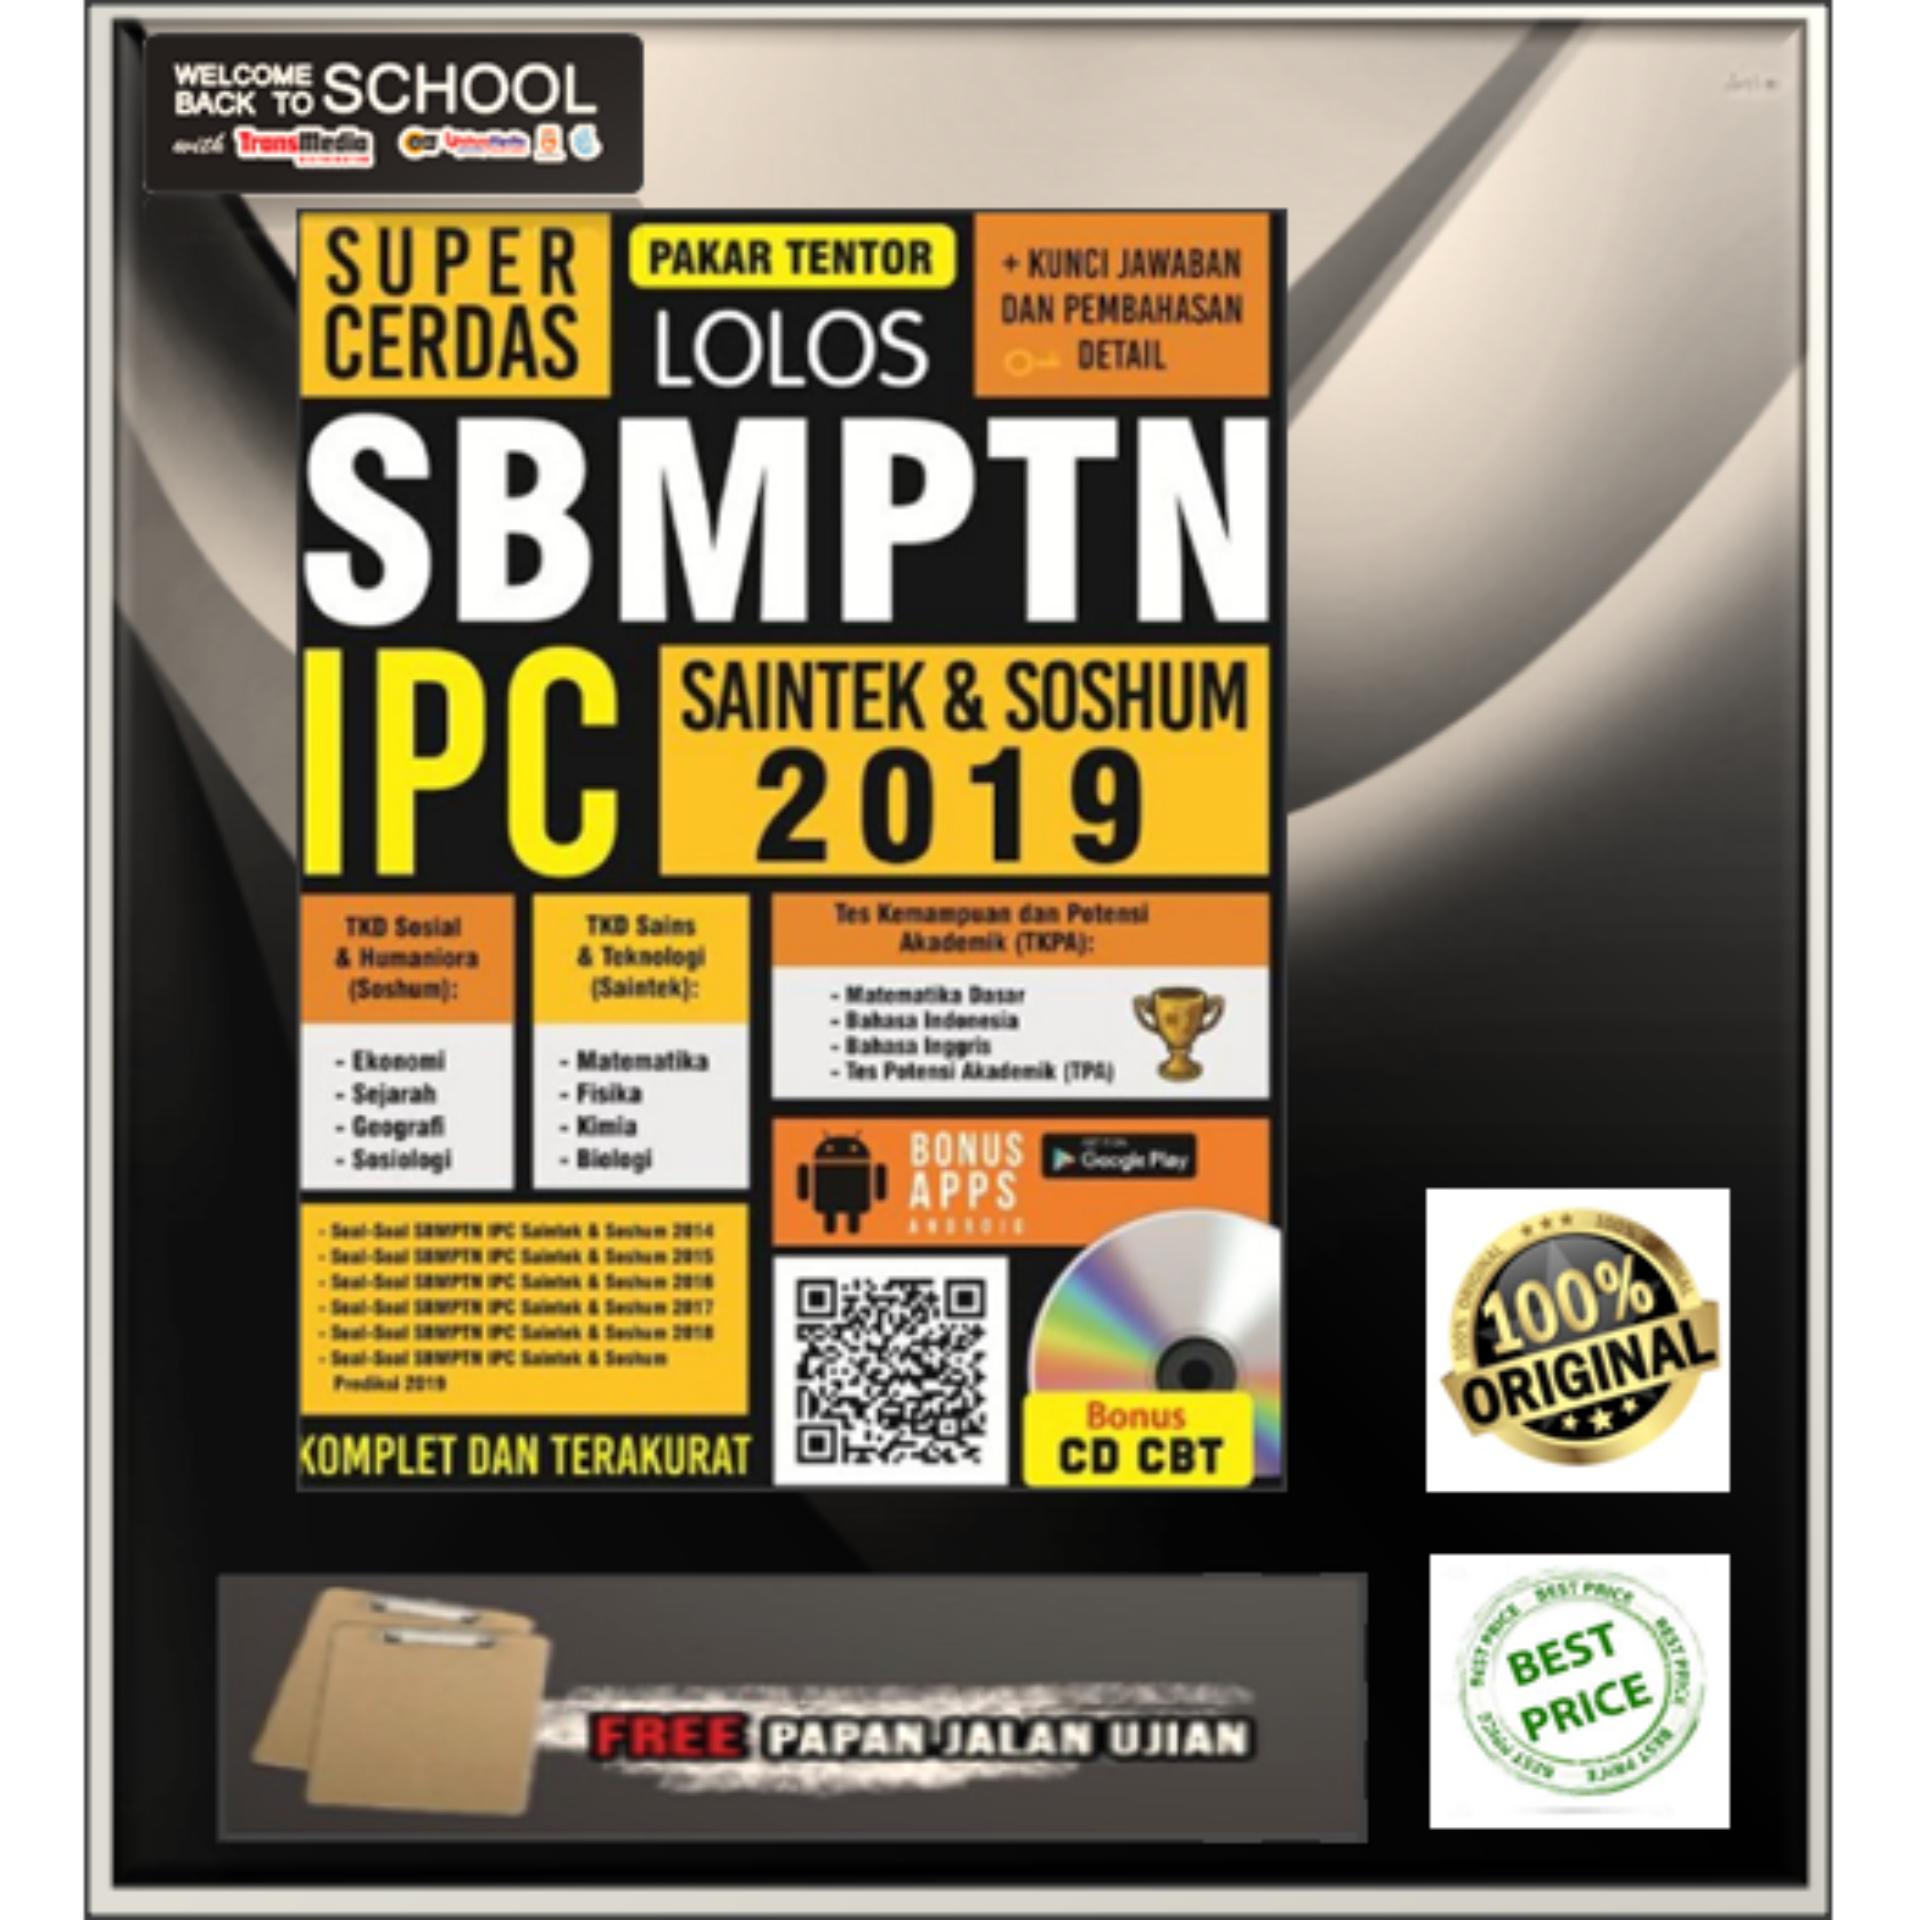 SUPER CERDAS LOLOS SBMPTN IPC SAINTEK & SOSHUM 2019 BONUS CD CBT